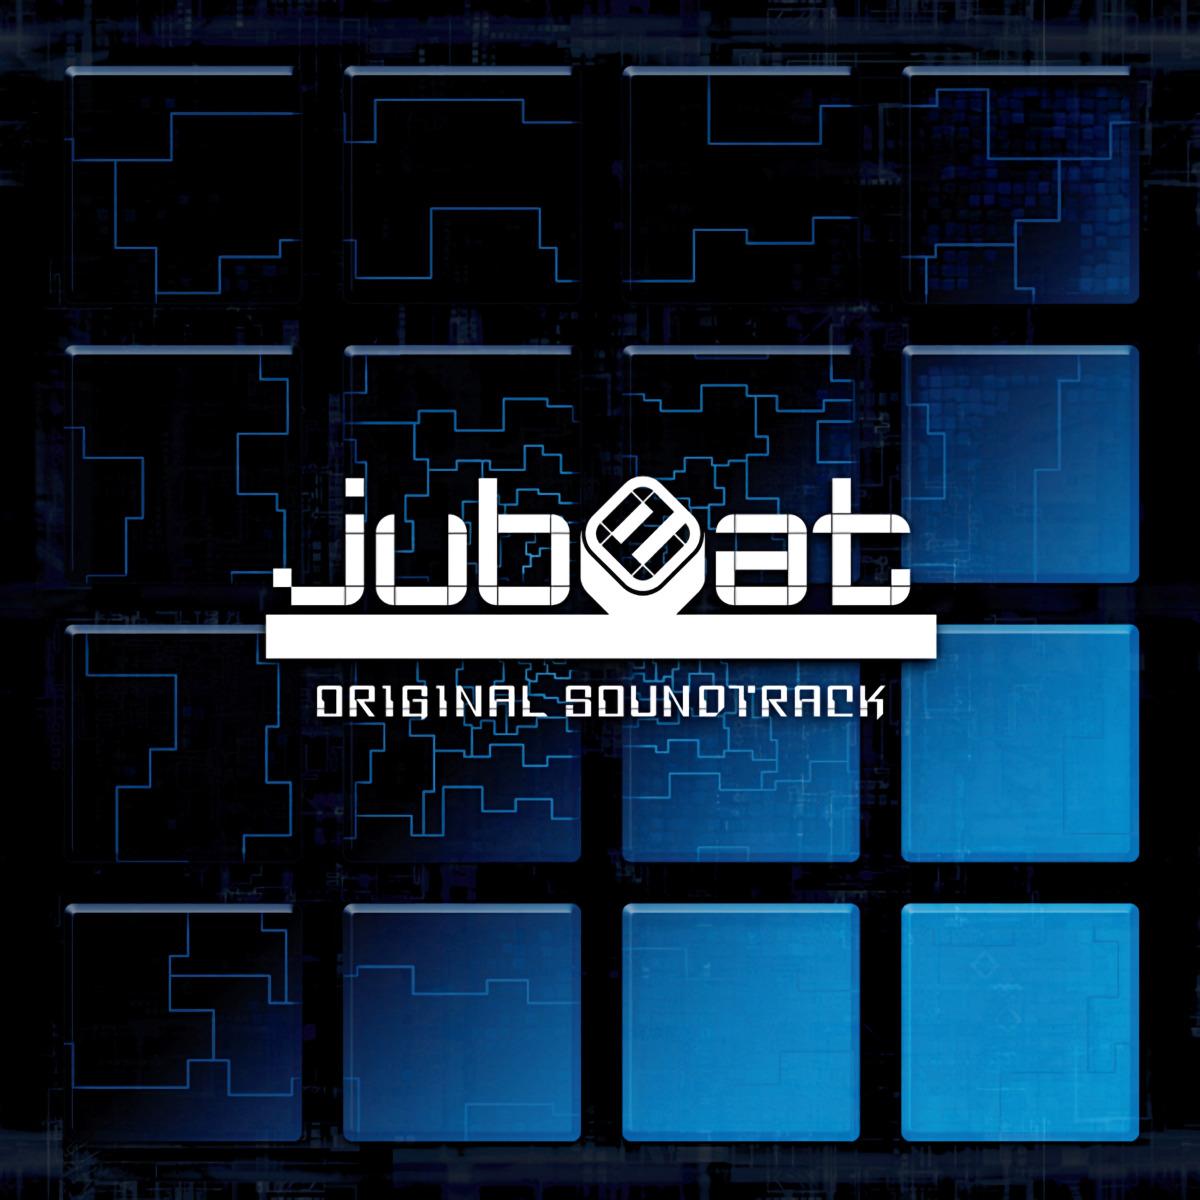 Jubeat Original Soundtrack